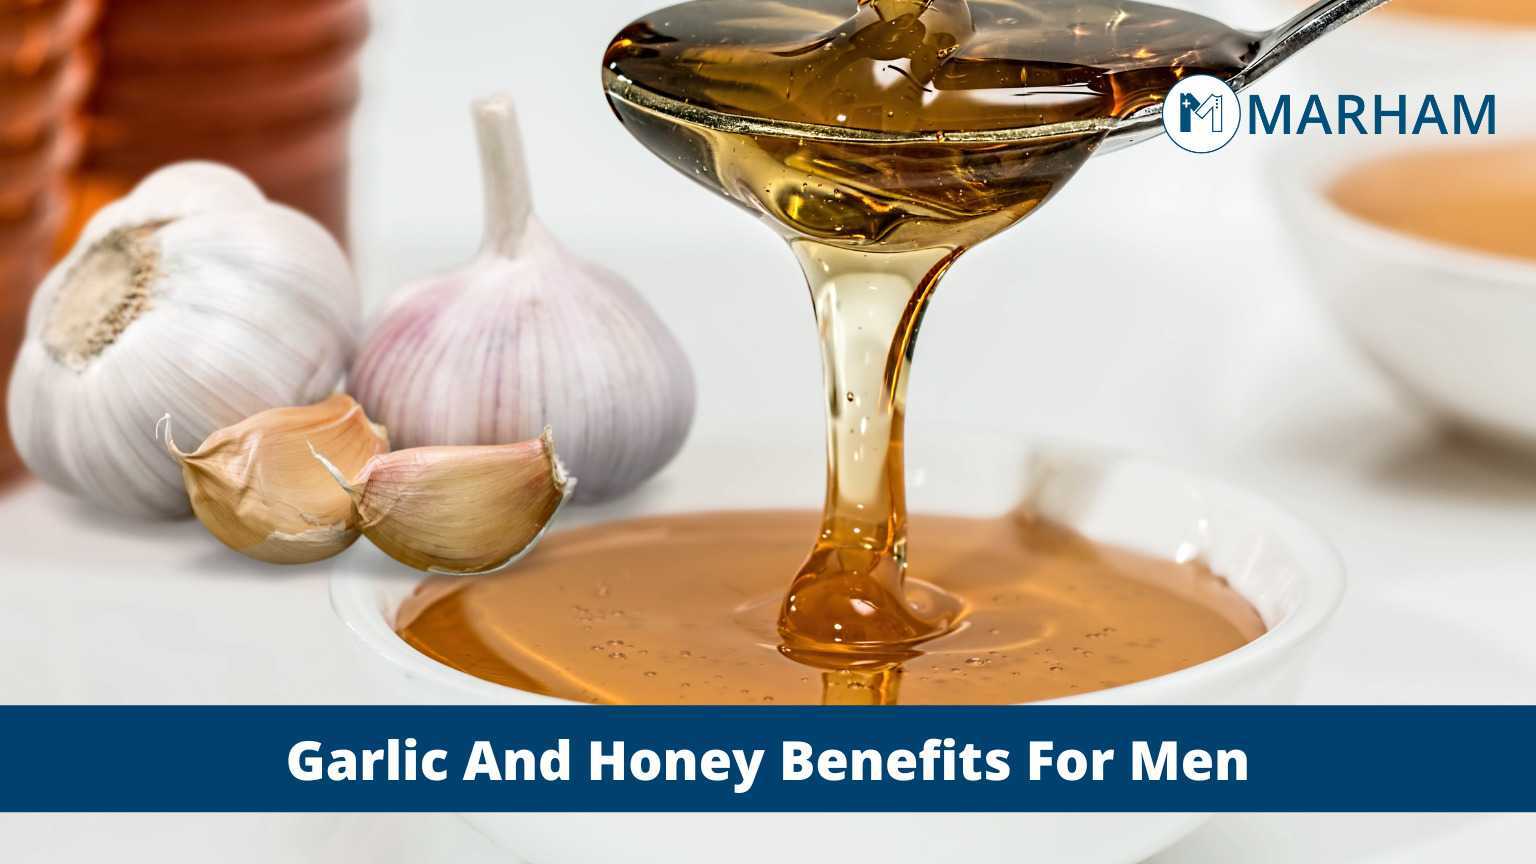 Benefits Of Garlic And Honey For Men Does Garlic And Honey Increase